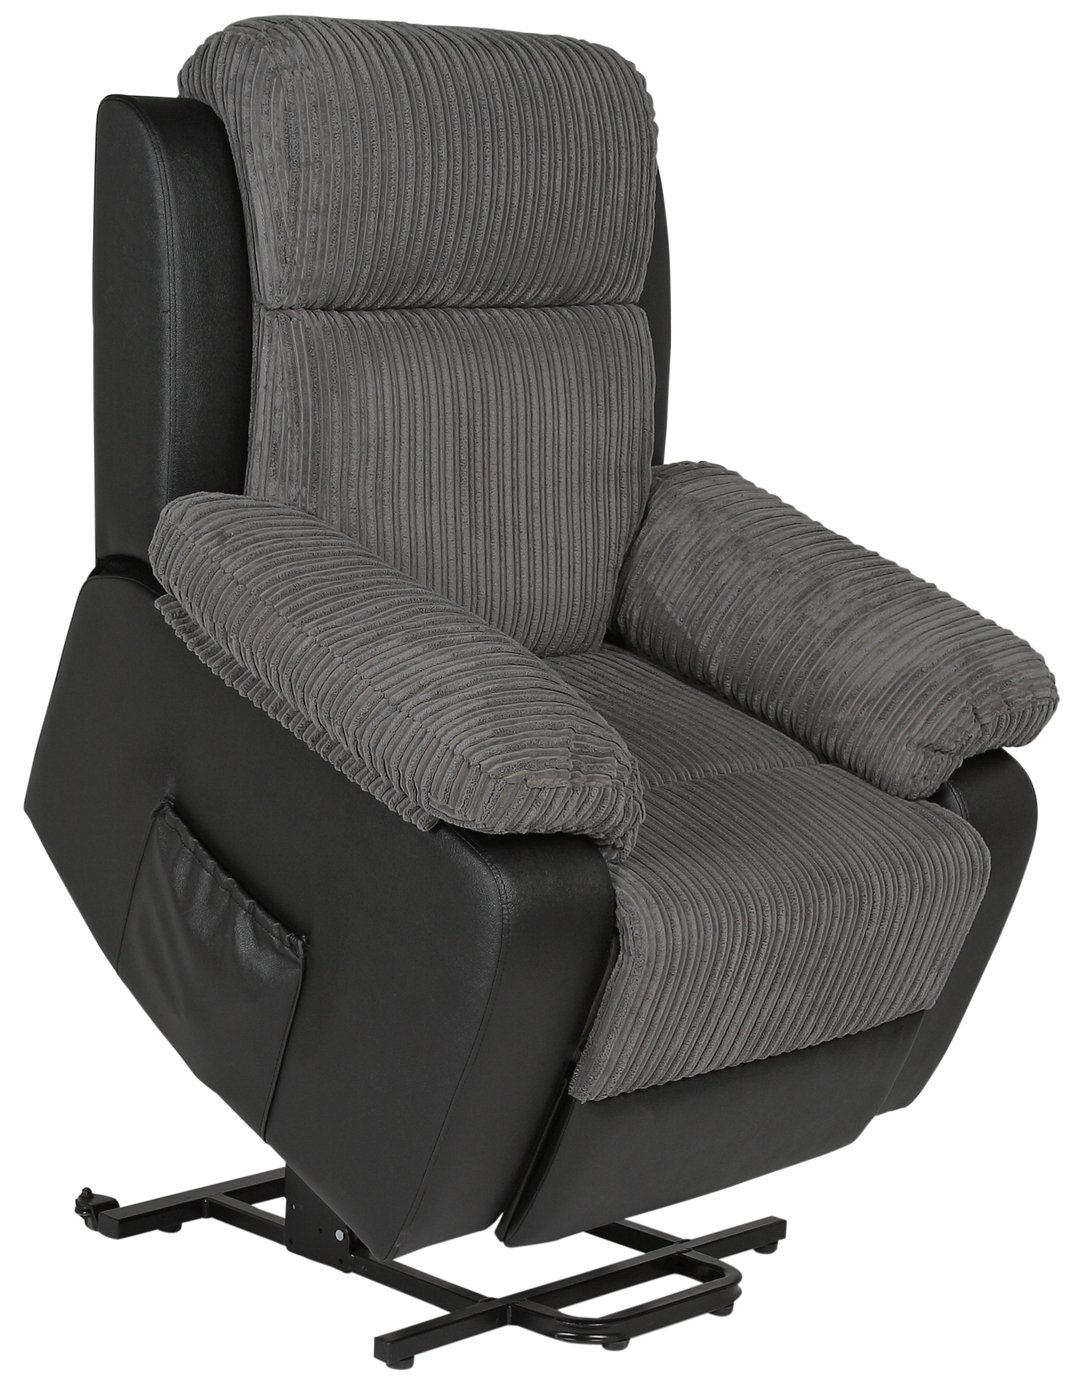 Argos Home Bradley Riser Recliner Fabric Chair Reviews